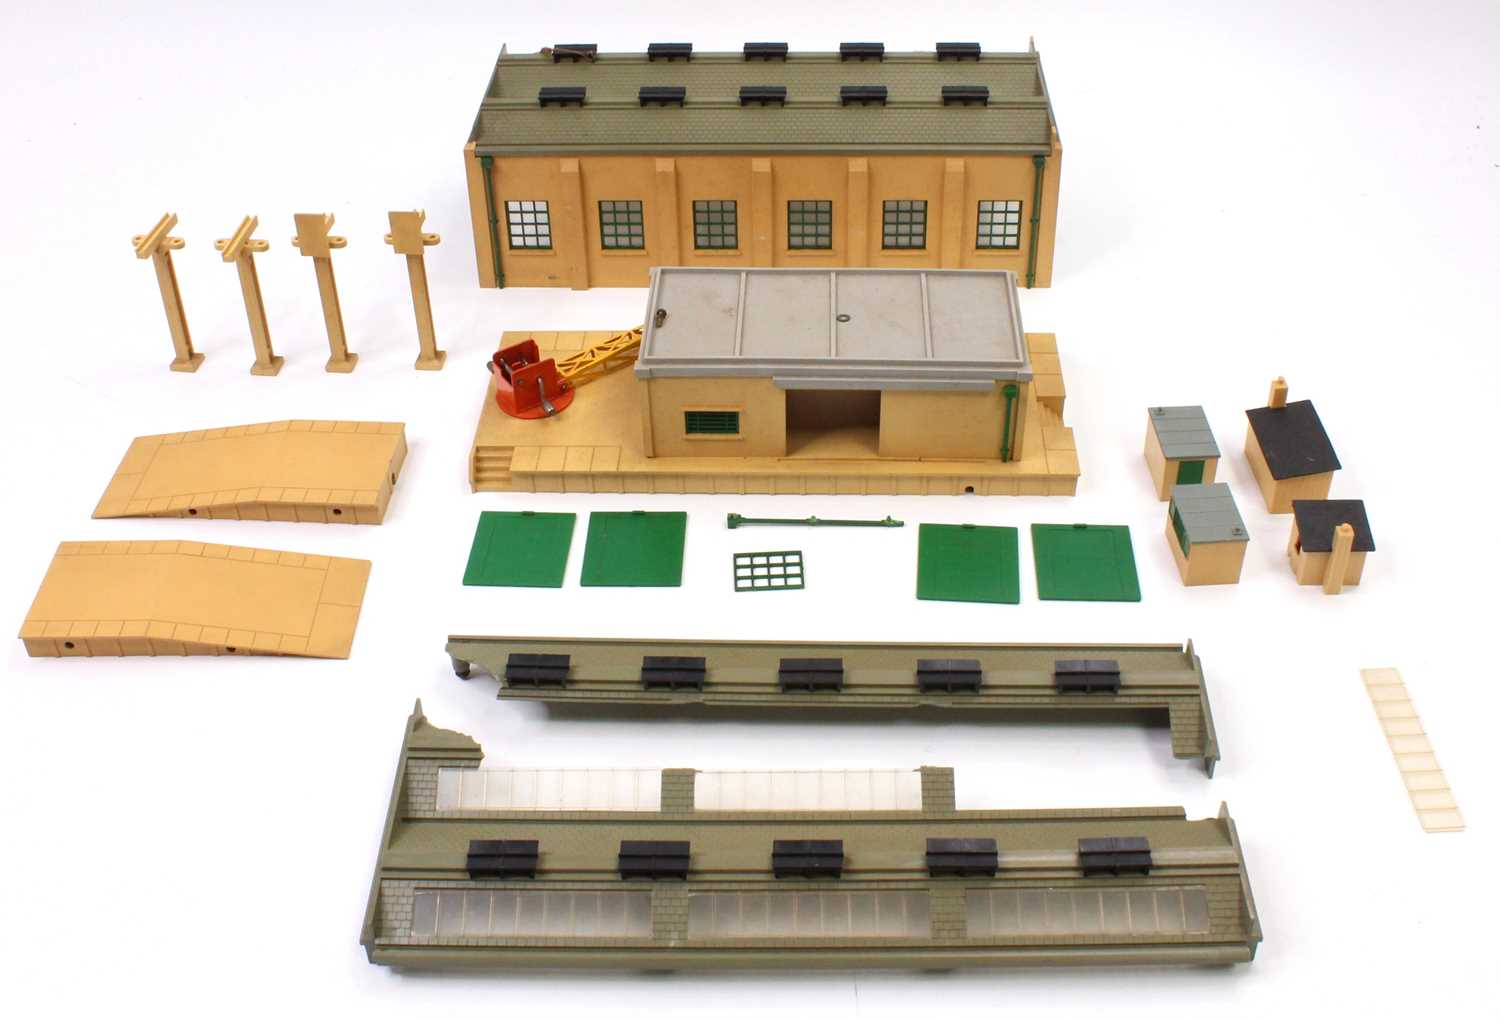 Hornby-Dublo super detail plastic buildings: Engine shed assembled and complete; goods depot